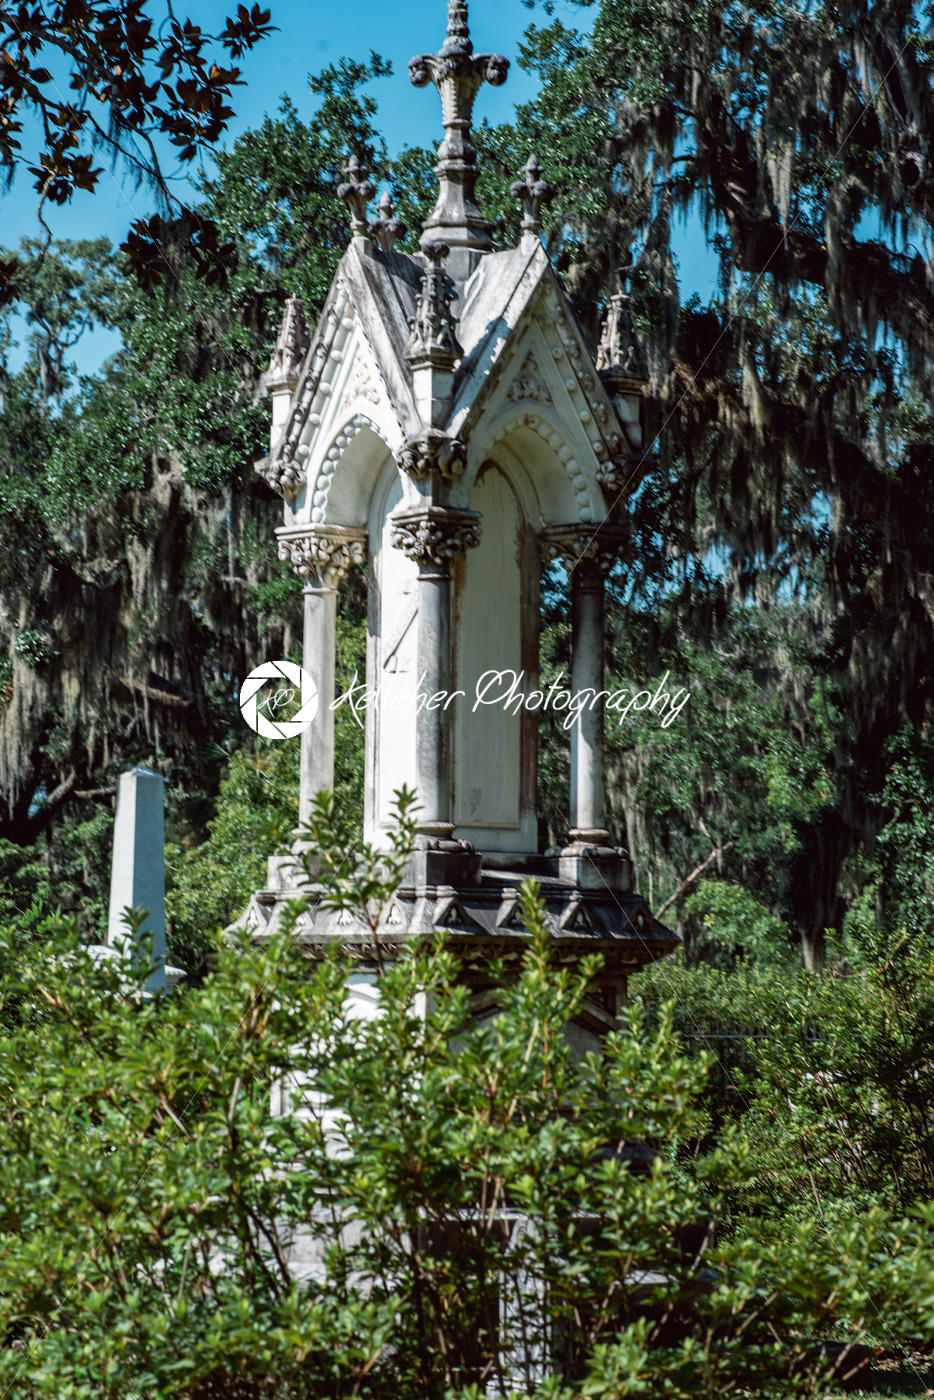 Edward Phdelford Cemetery Statuary Statue Bonaventure Cemetery Savannah Georgia - Kelleher Photography Store